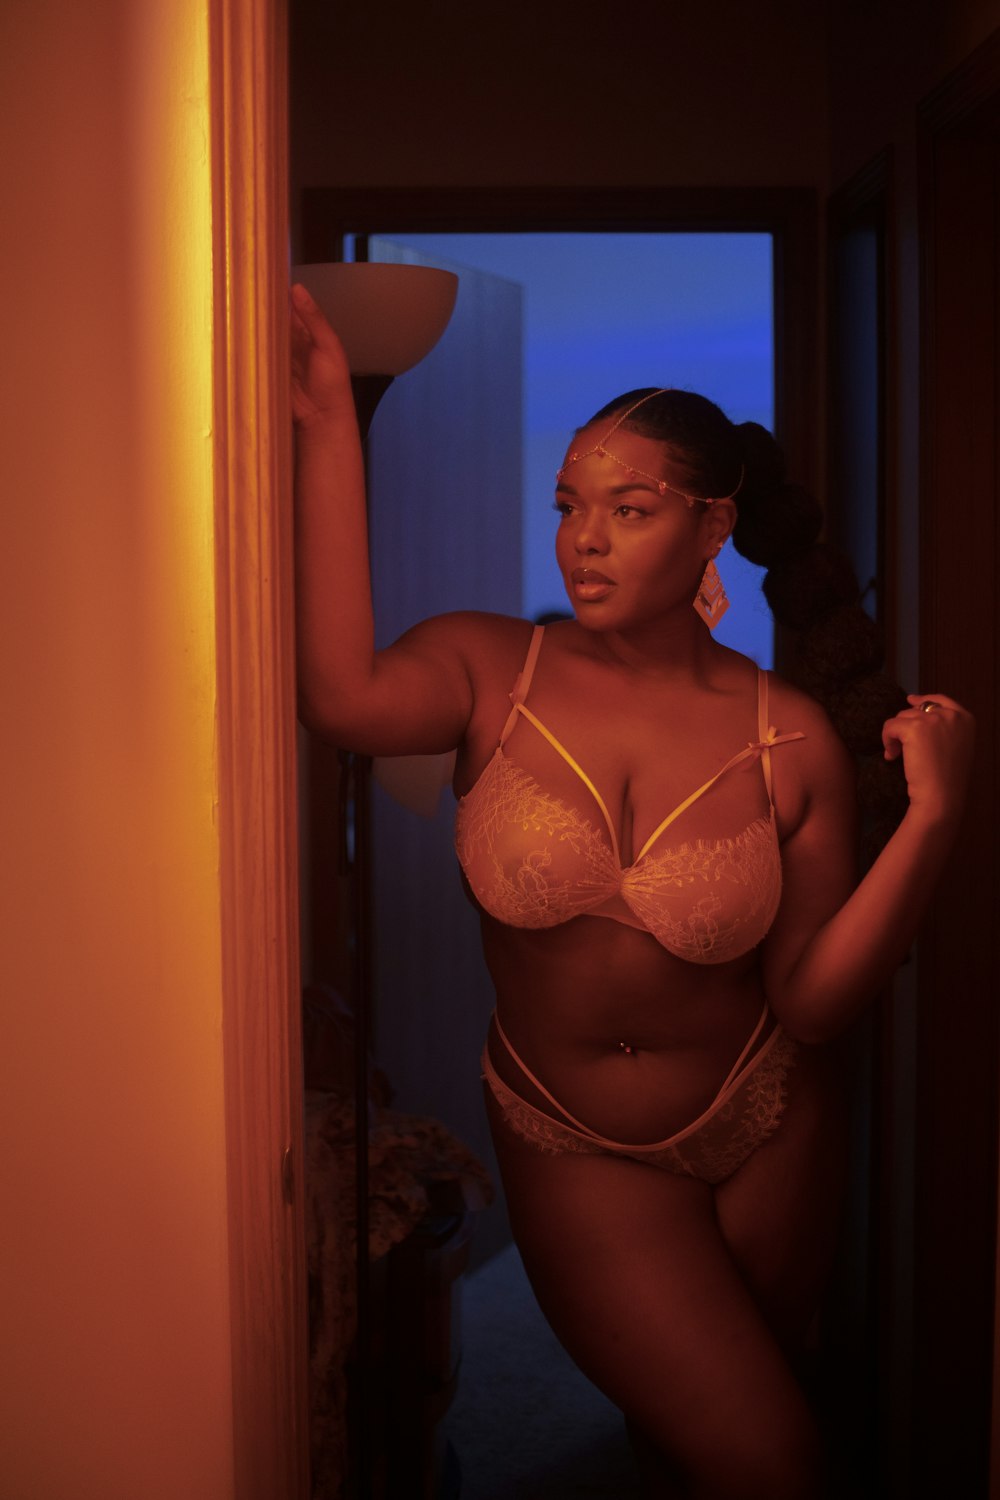 woman in brown bra and panty standing near door